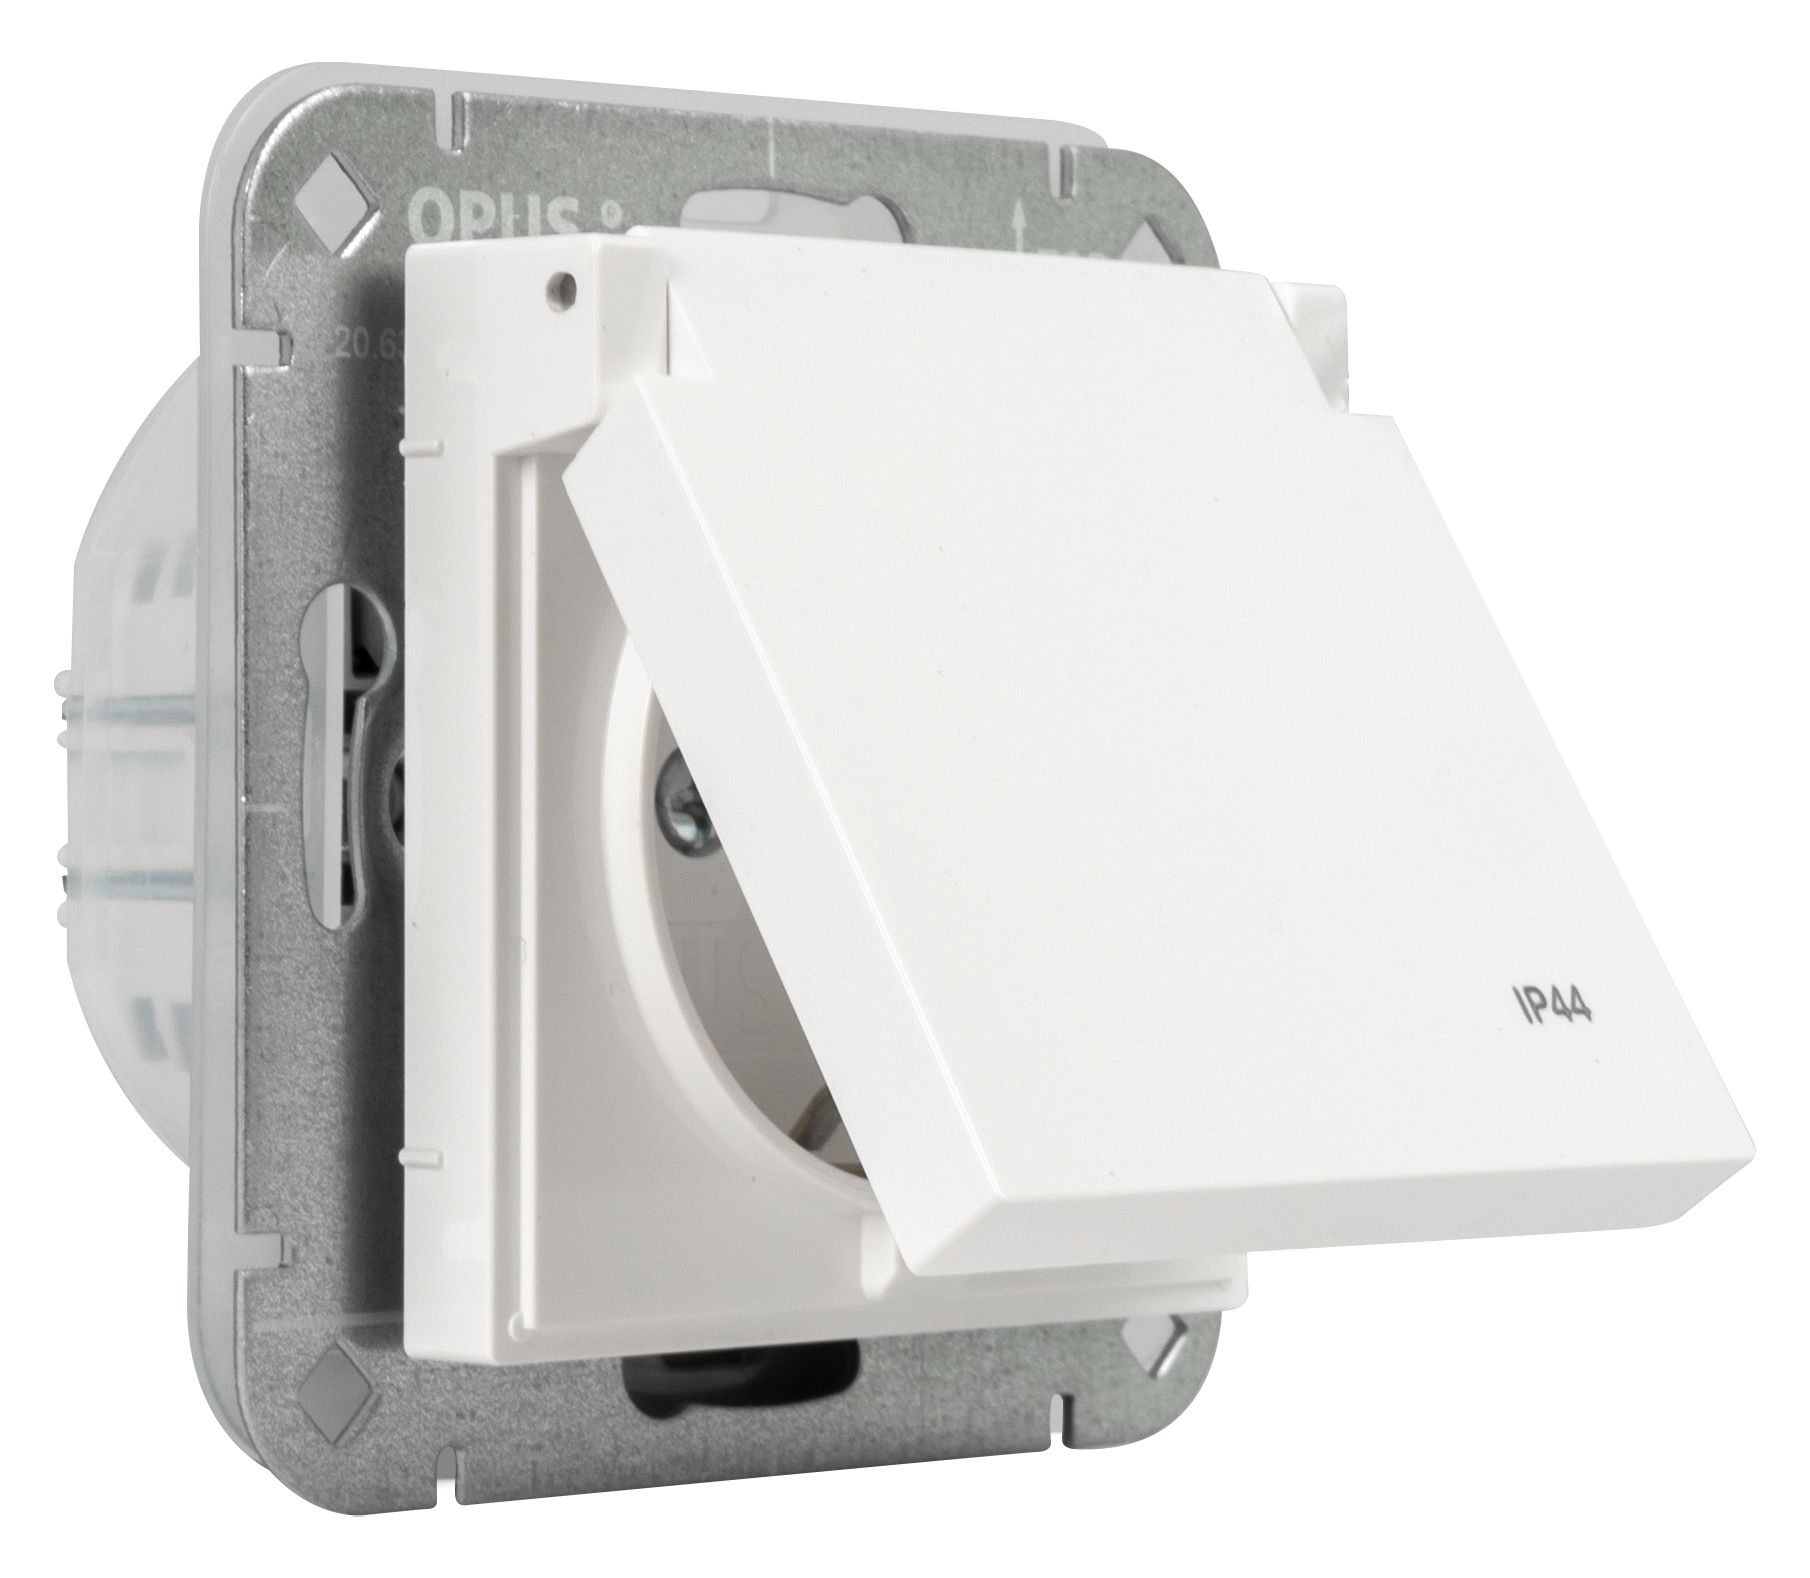 OPUS 55 Schutzkontakt-Steckdose Premium mit Klappdeckel, IP44